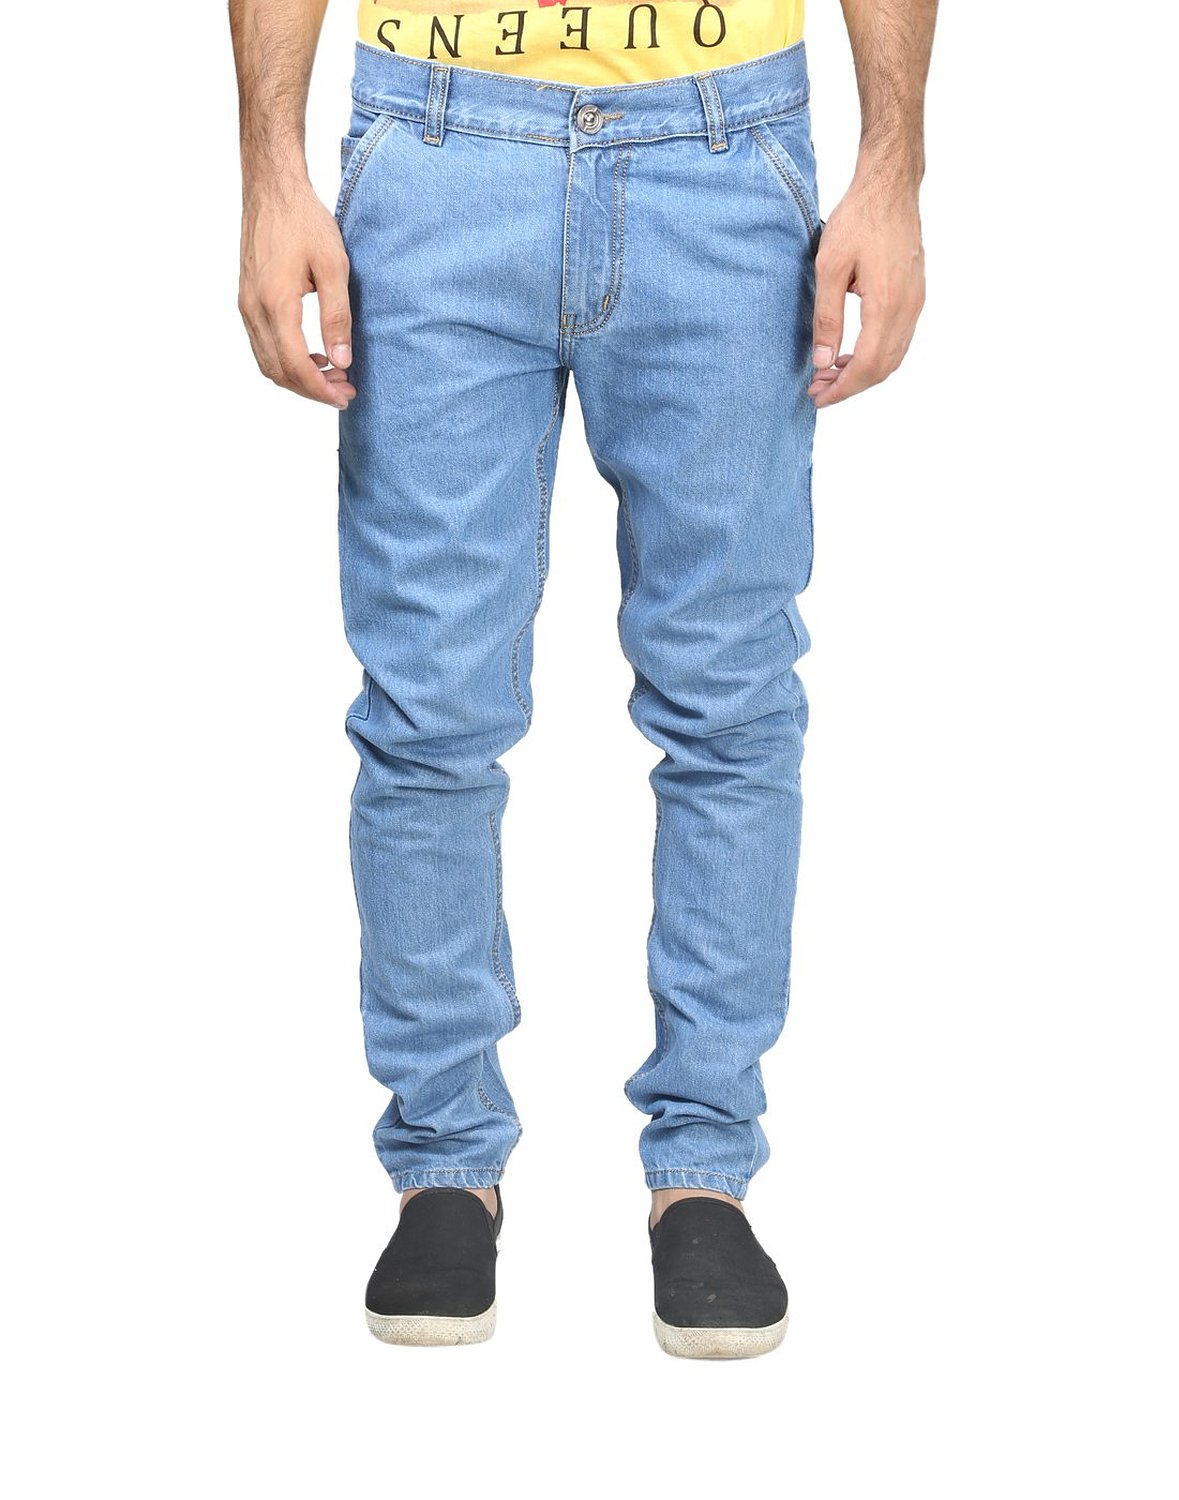 Buy Men's Regular Fit Blue Jeans Online @ ₹750 from ShopClues